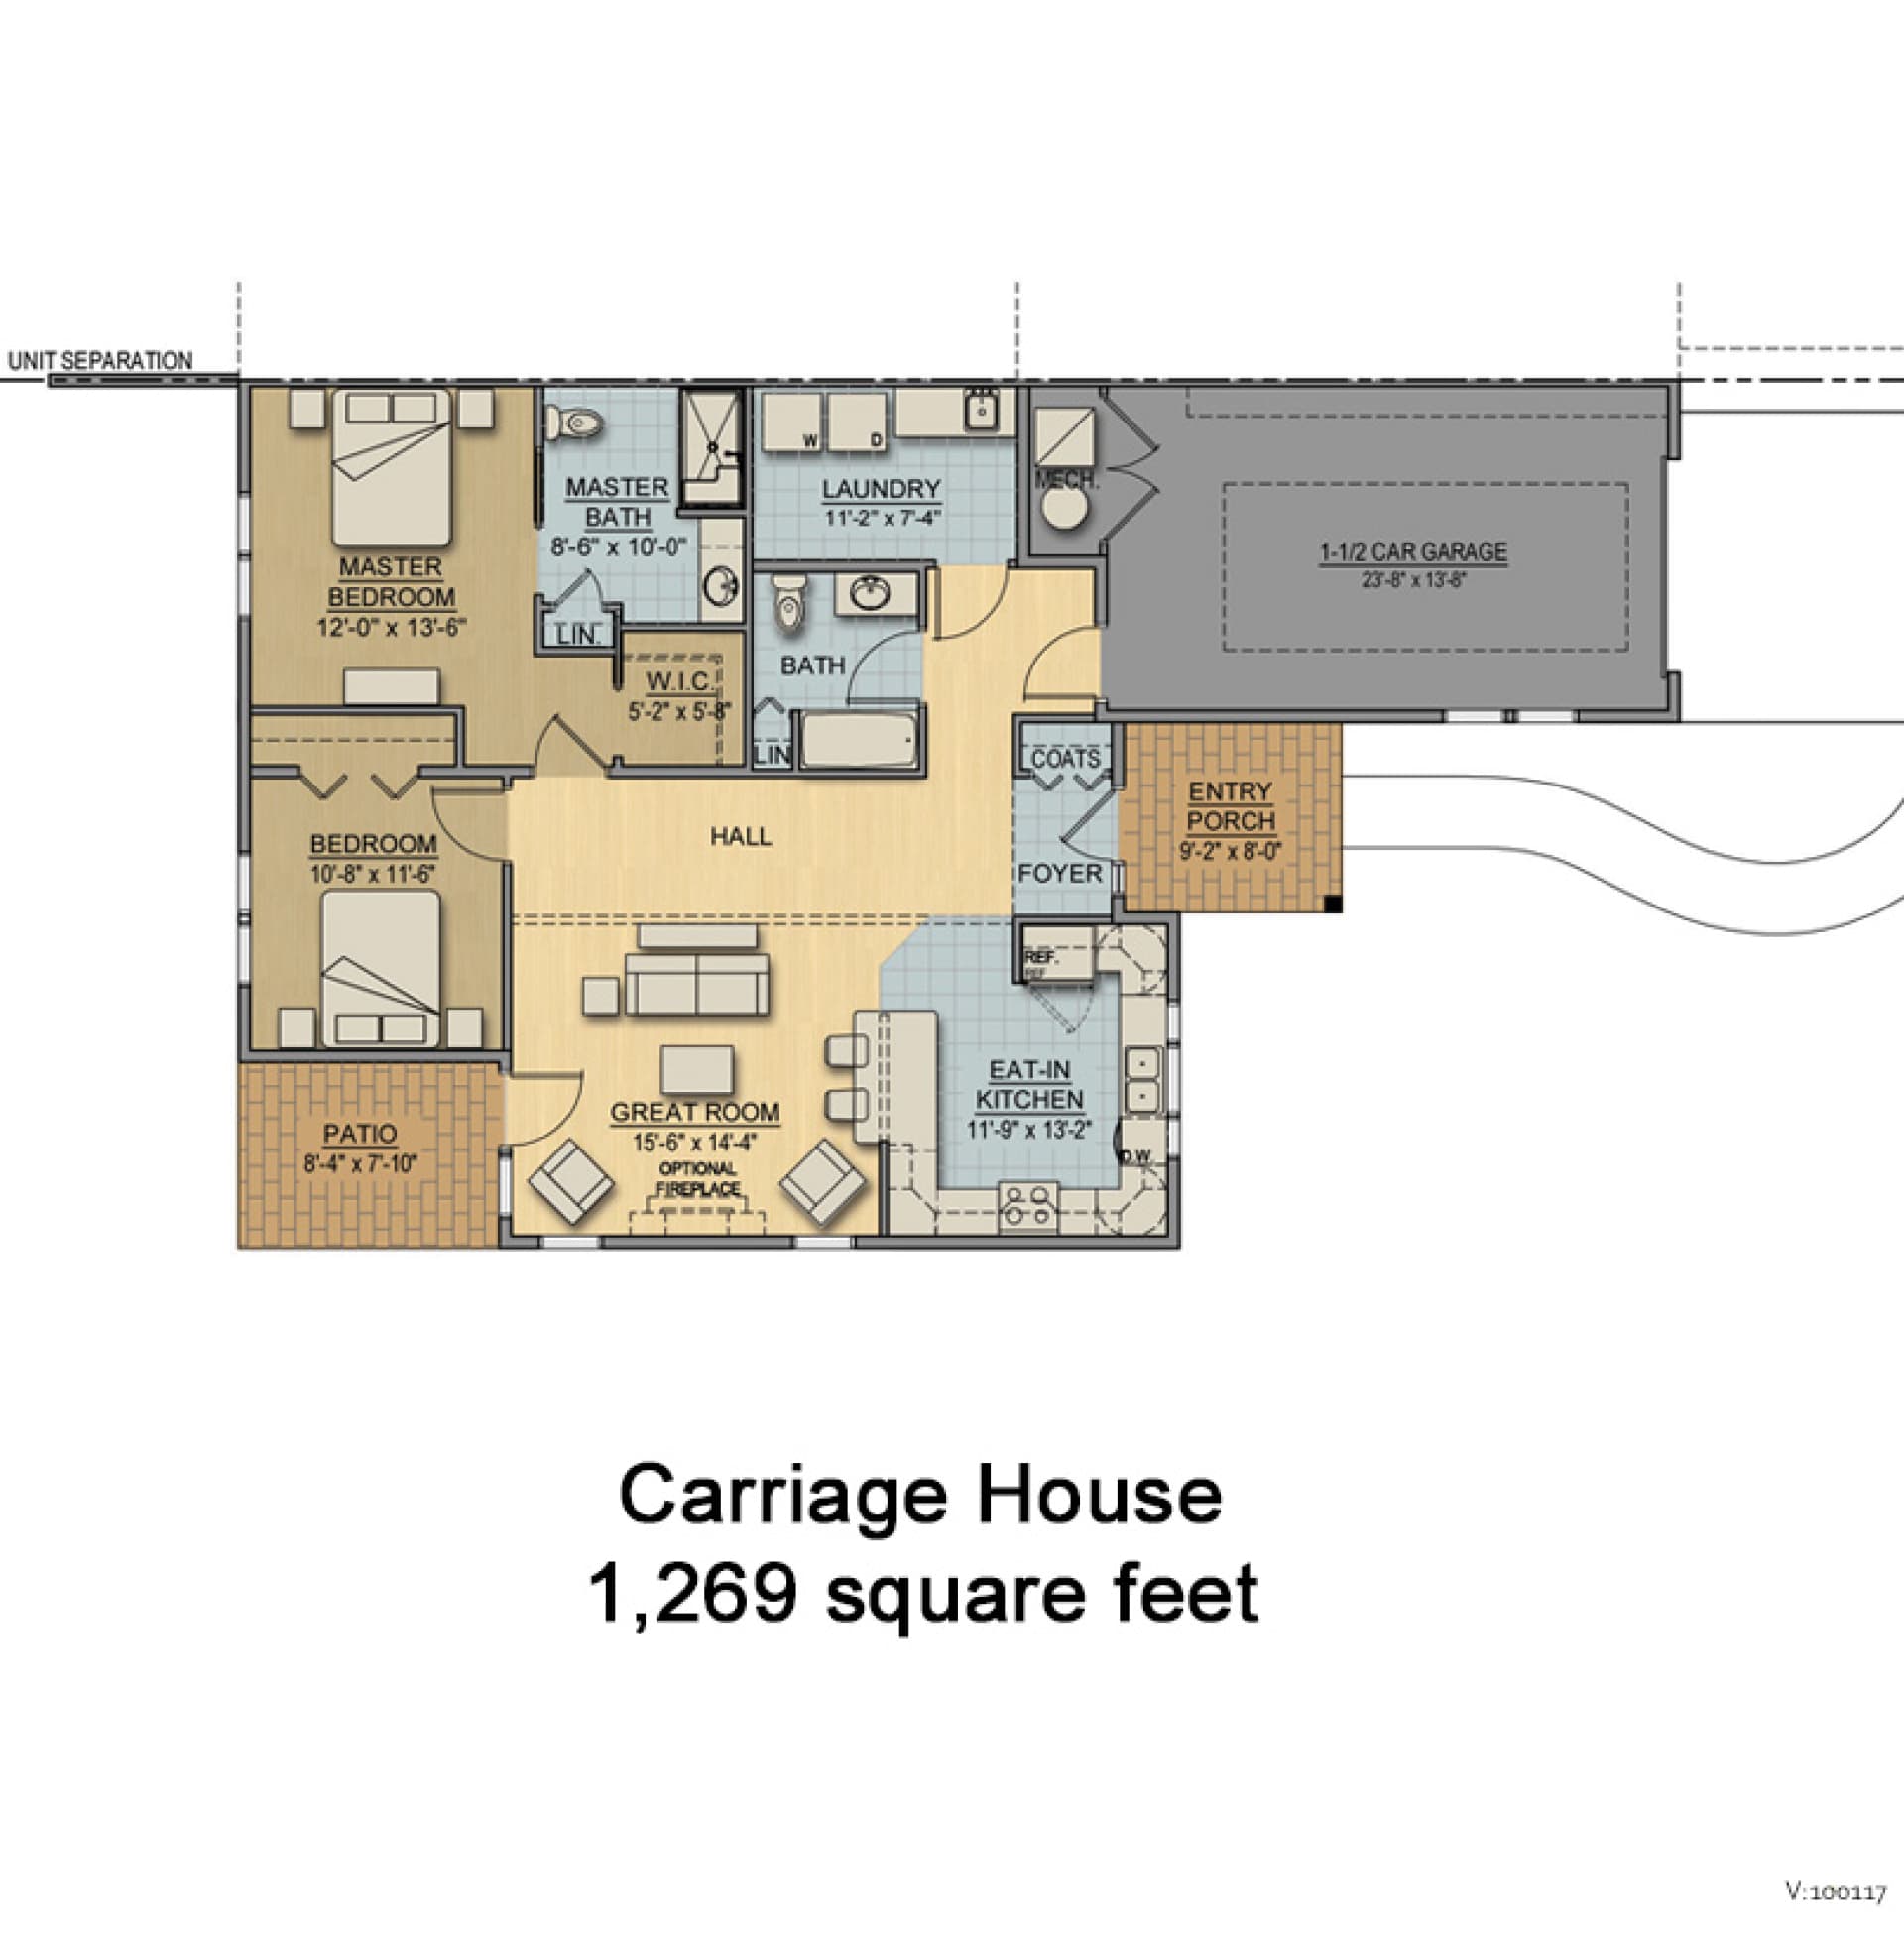 New-Cottage_Carriage-House-Floorplan.jpg